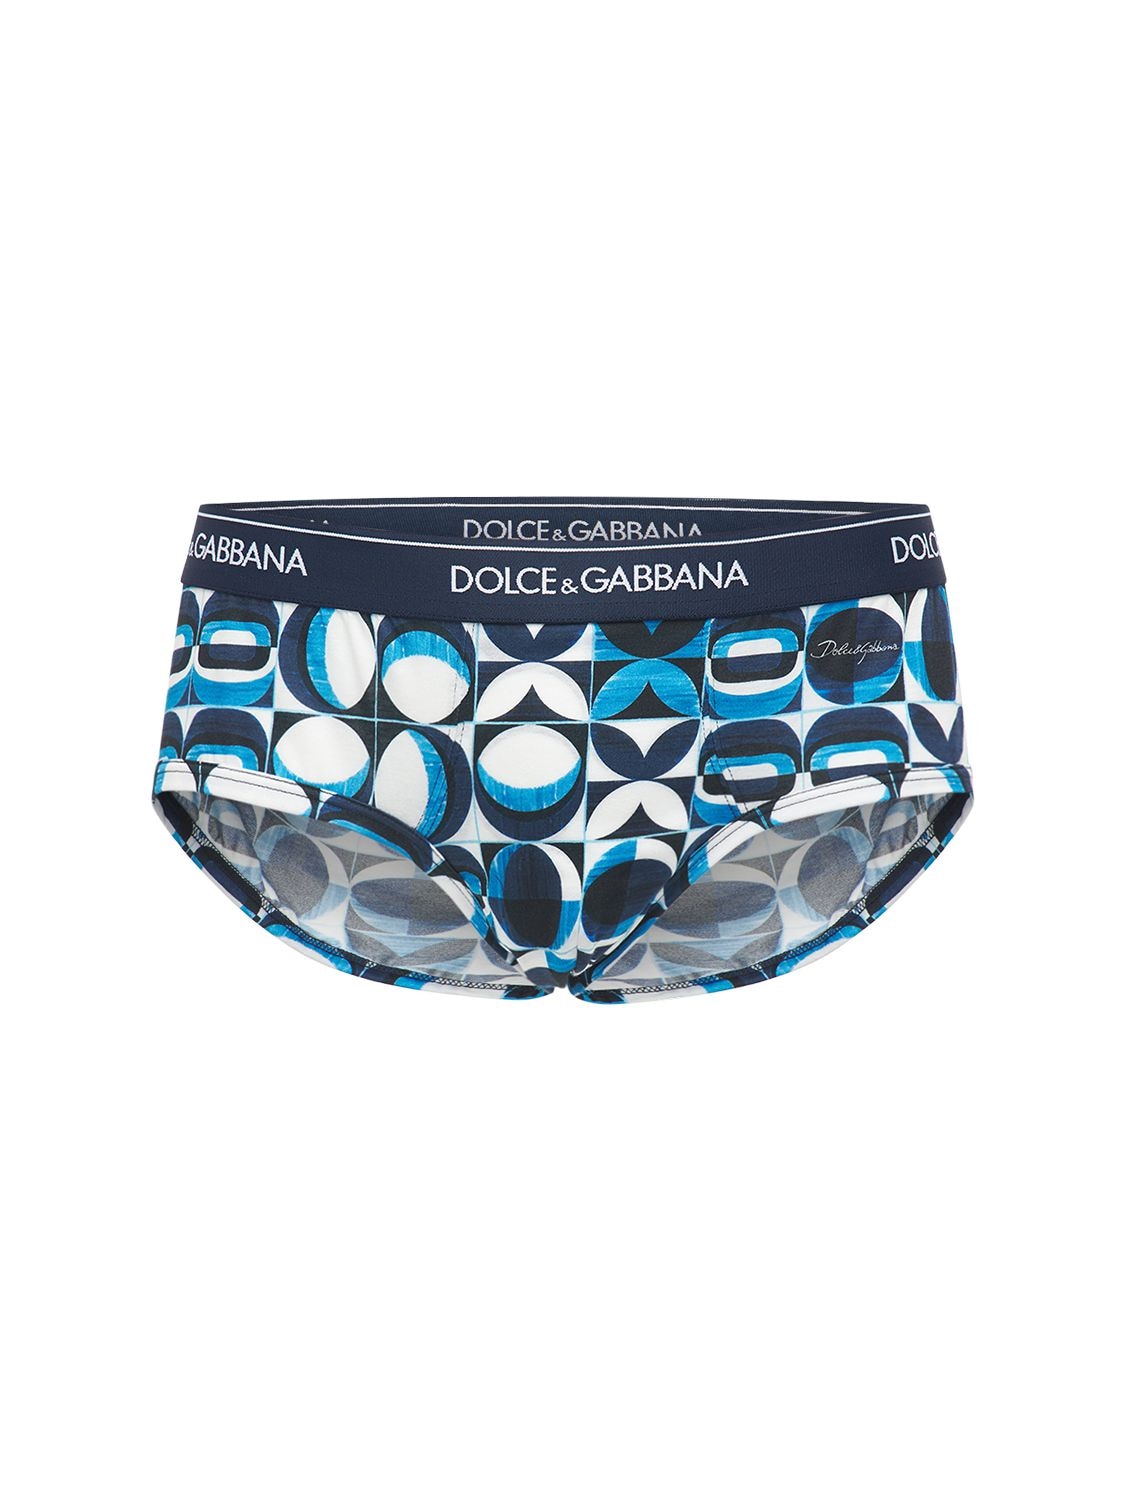 DOLCE & GABBANA LOGO MAIOLICA平纹针织棉质内裤,73IWVQ001-SEIXVEY1